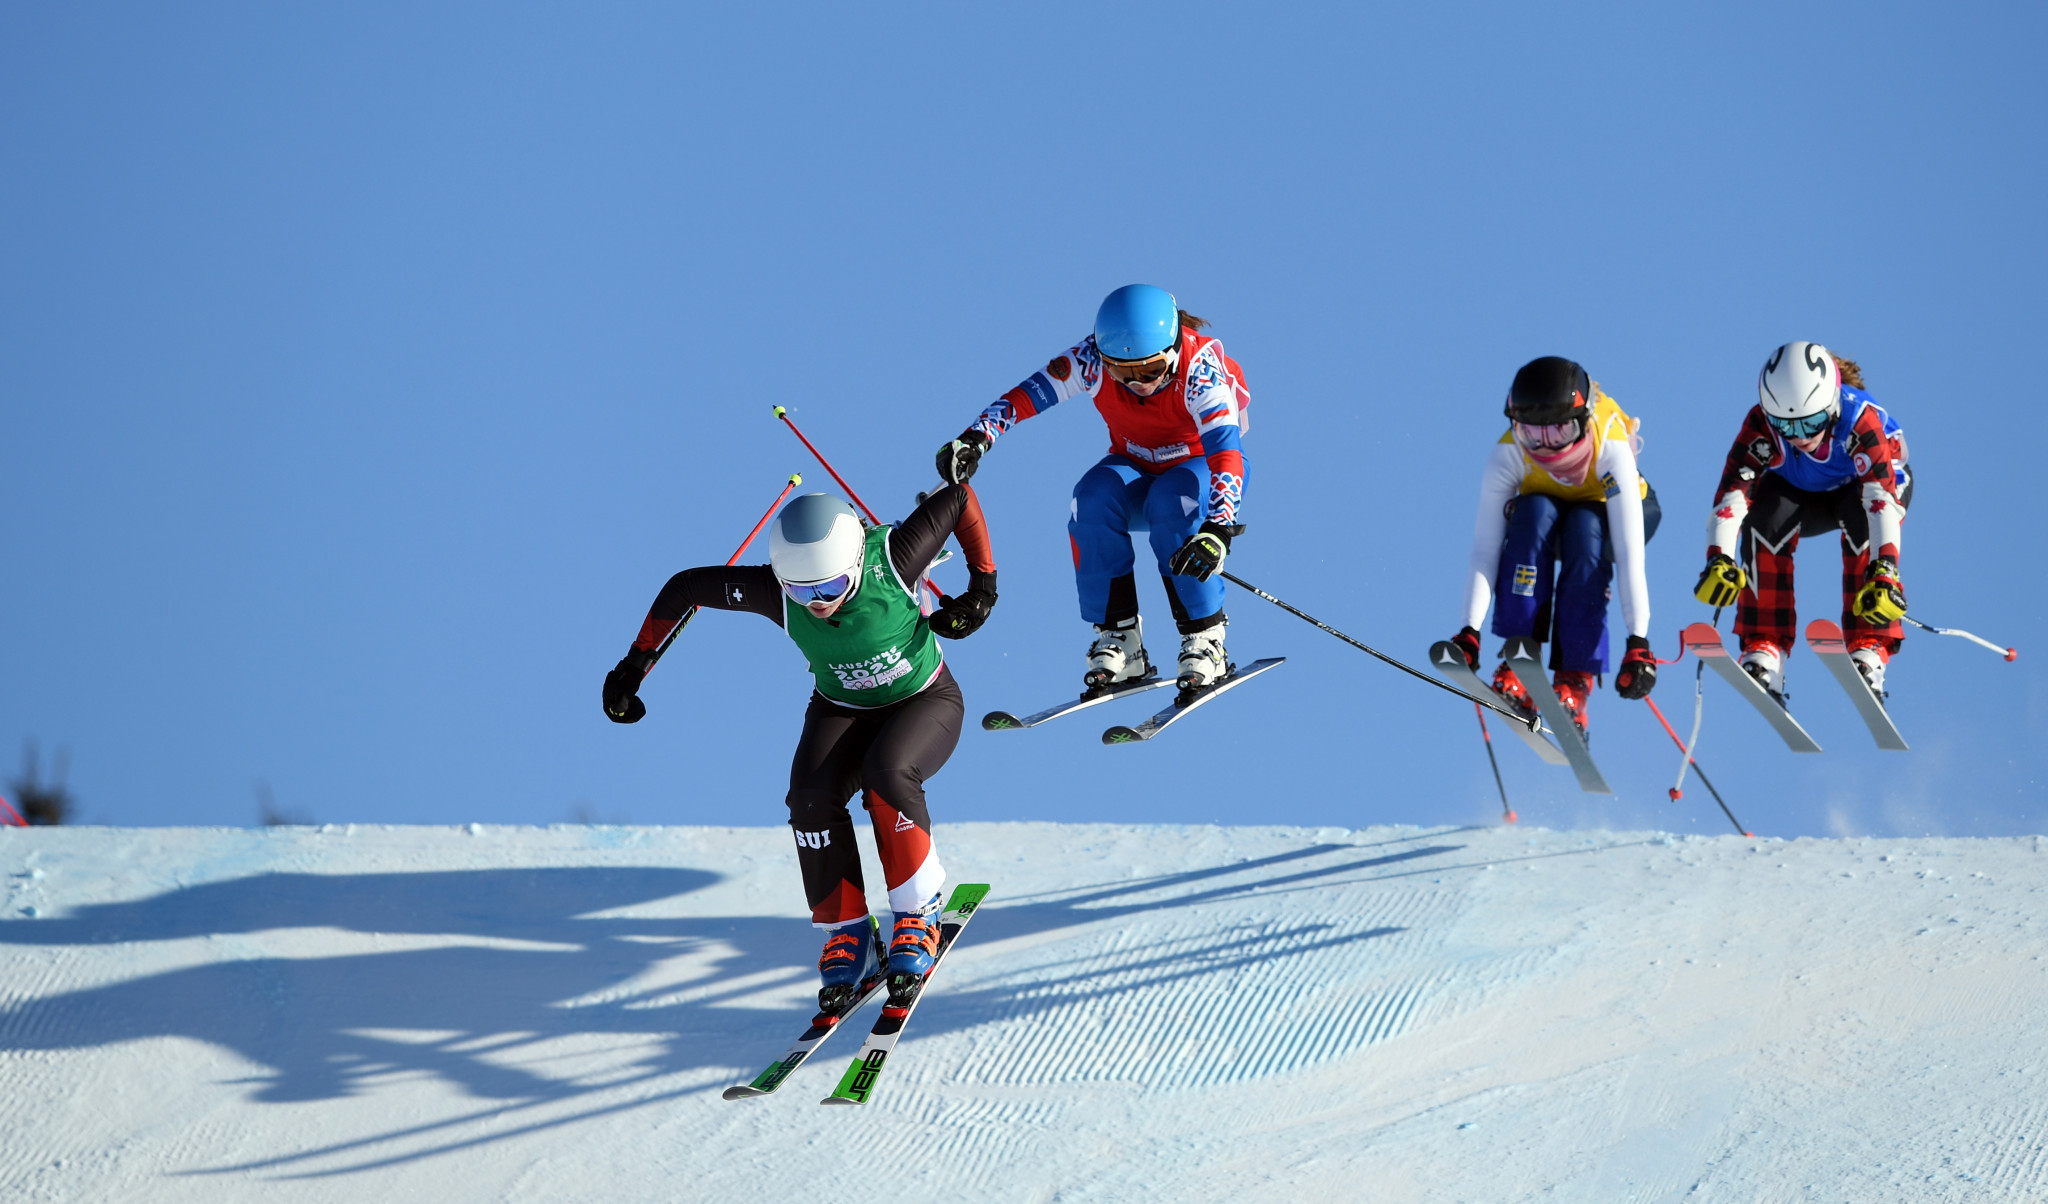 Marie-Karoline Krista won the women's ski cross final ©Getty Images